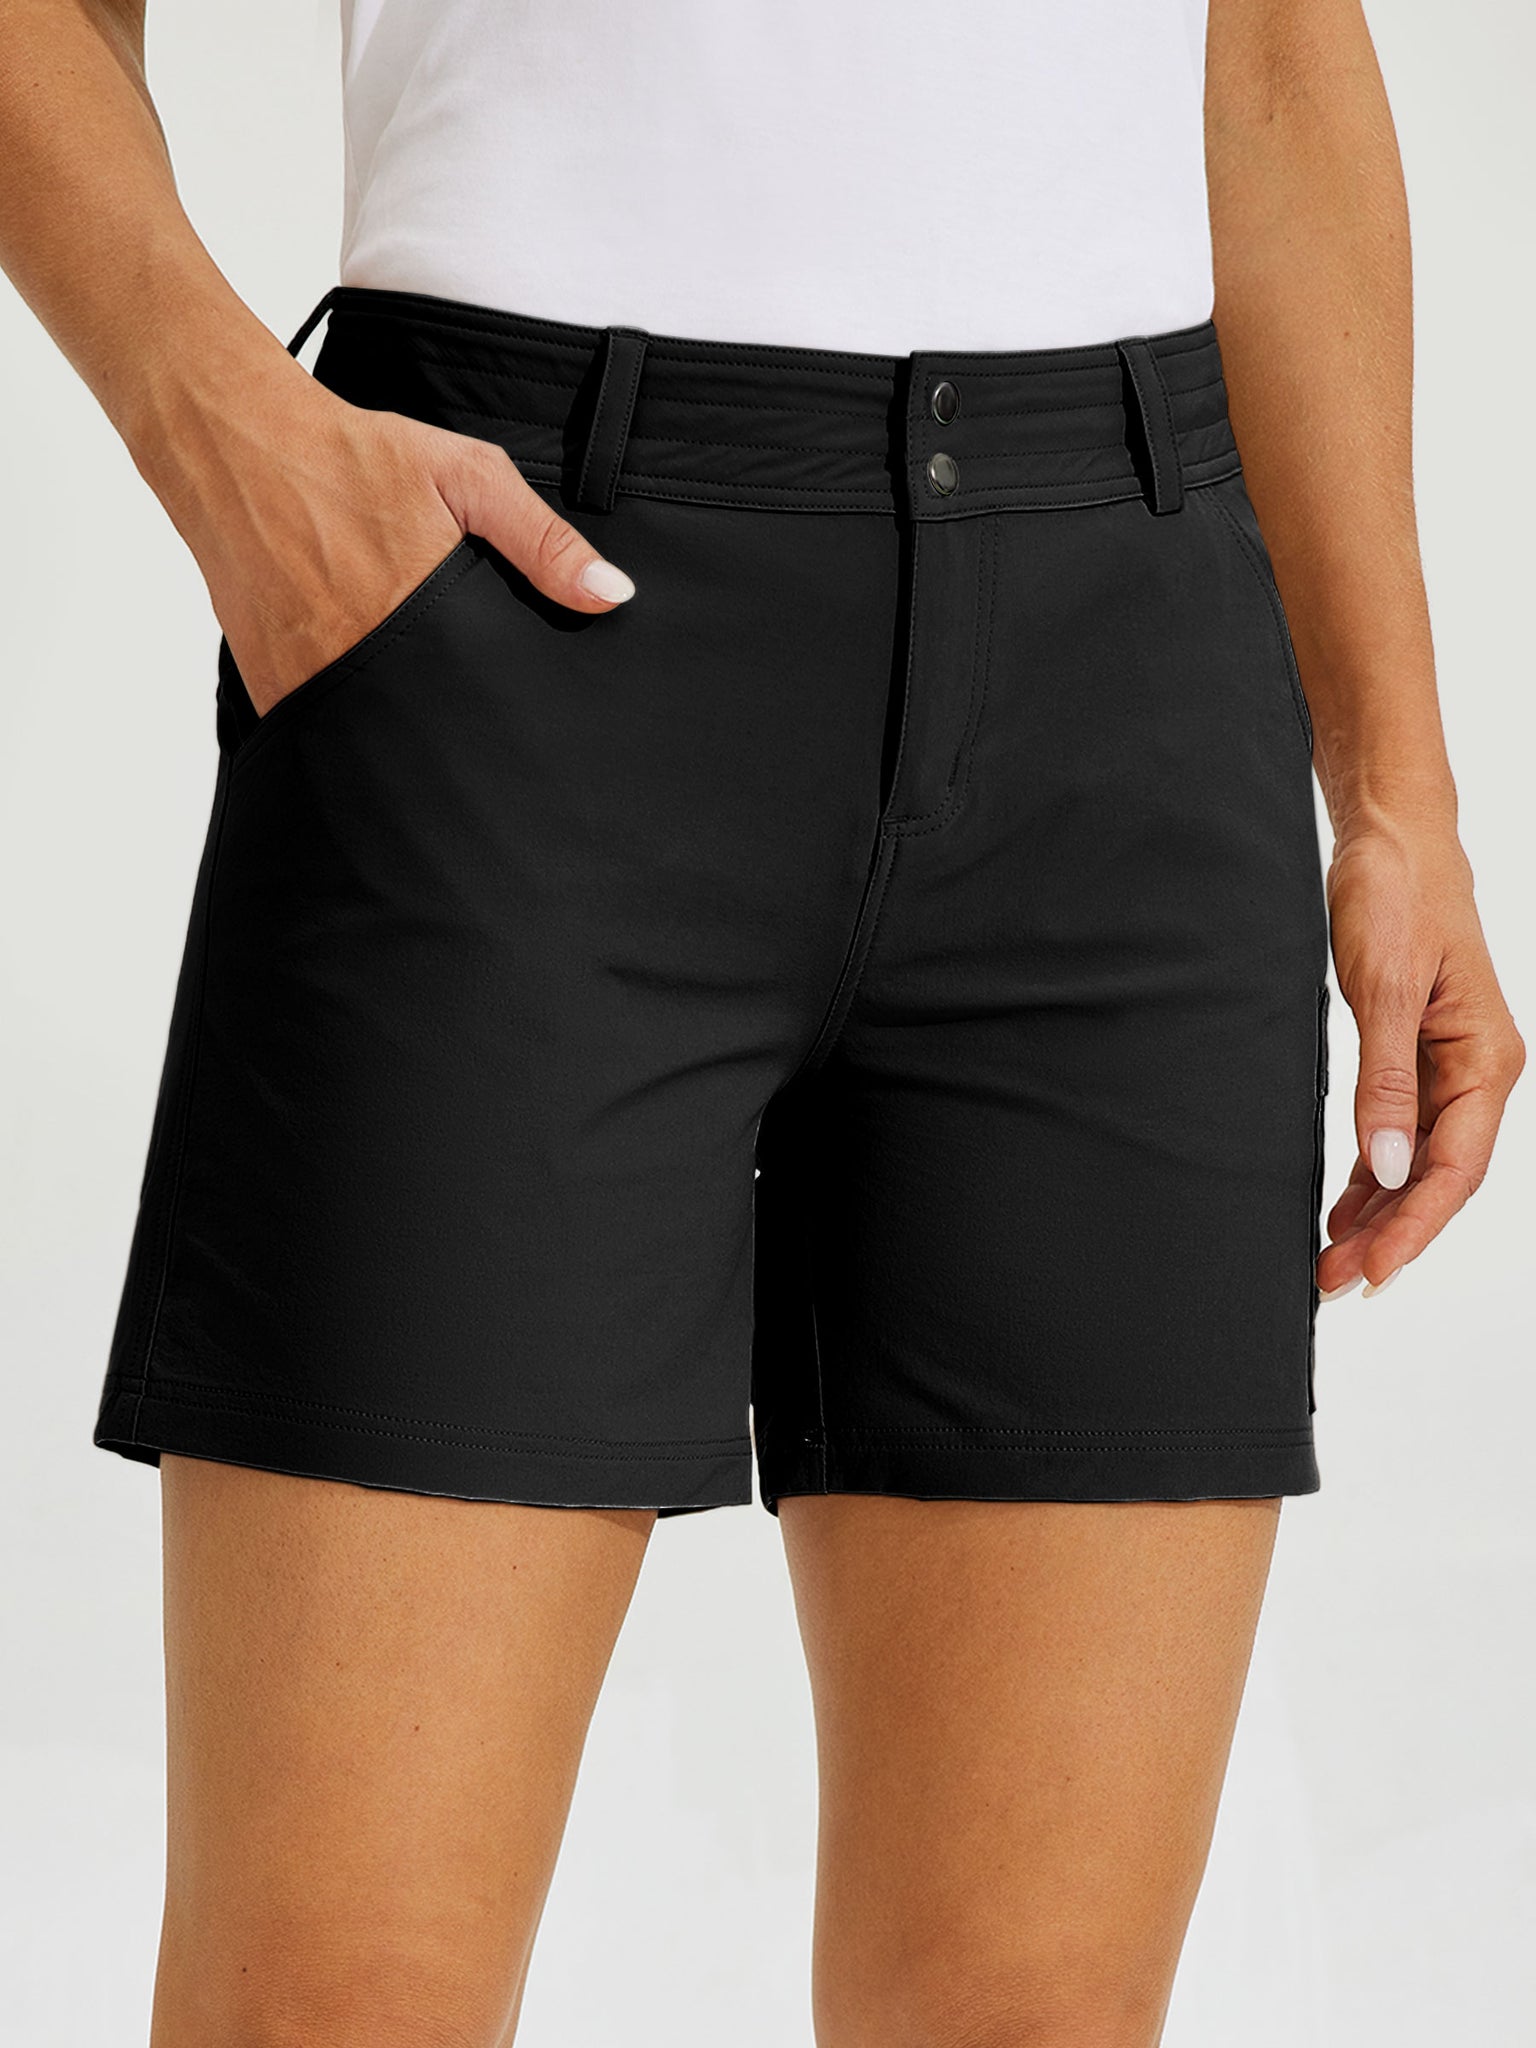 Women's Outdoor Pro Shorts 5Inch_Black1